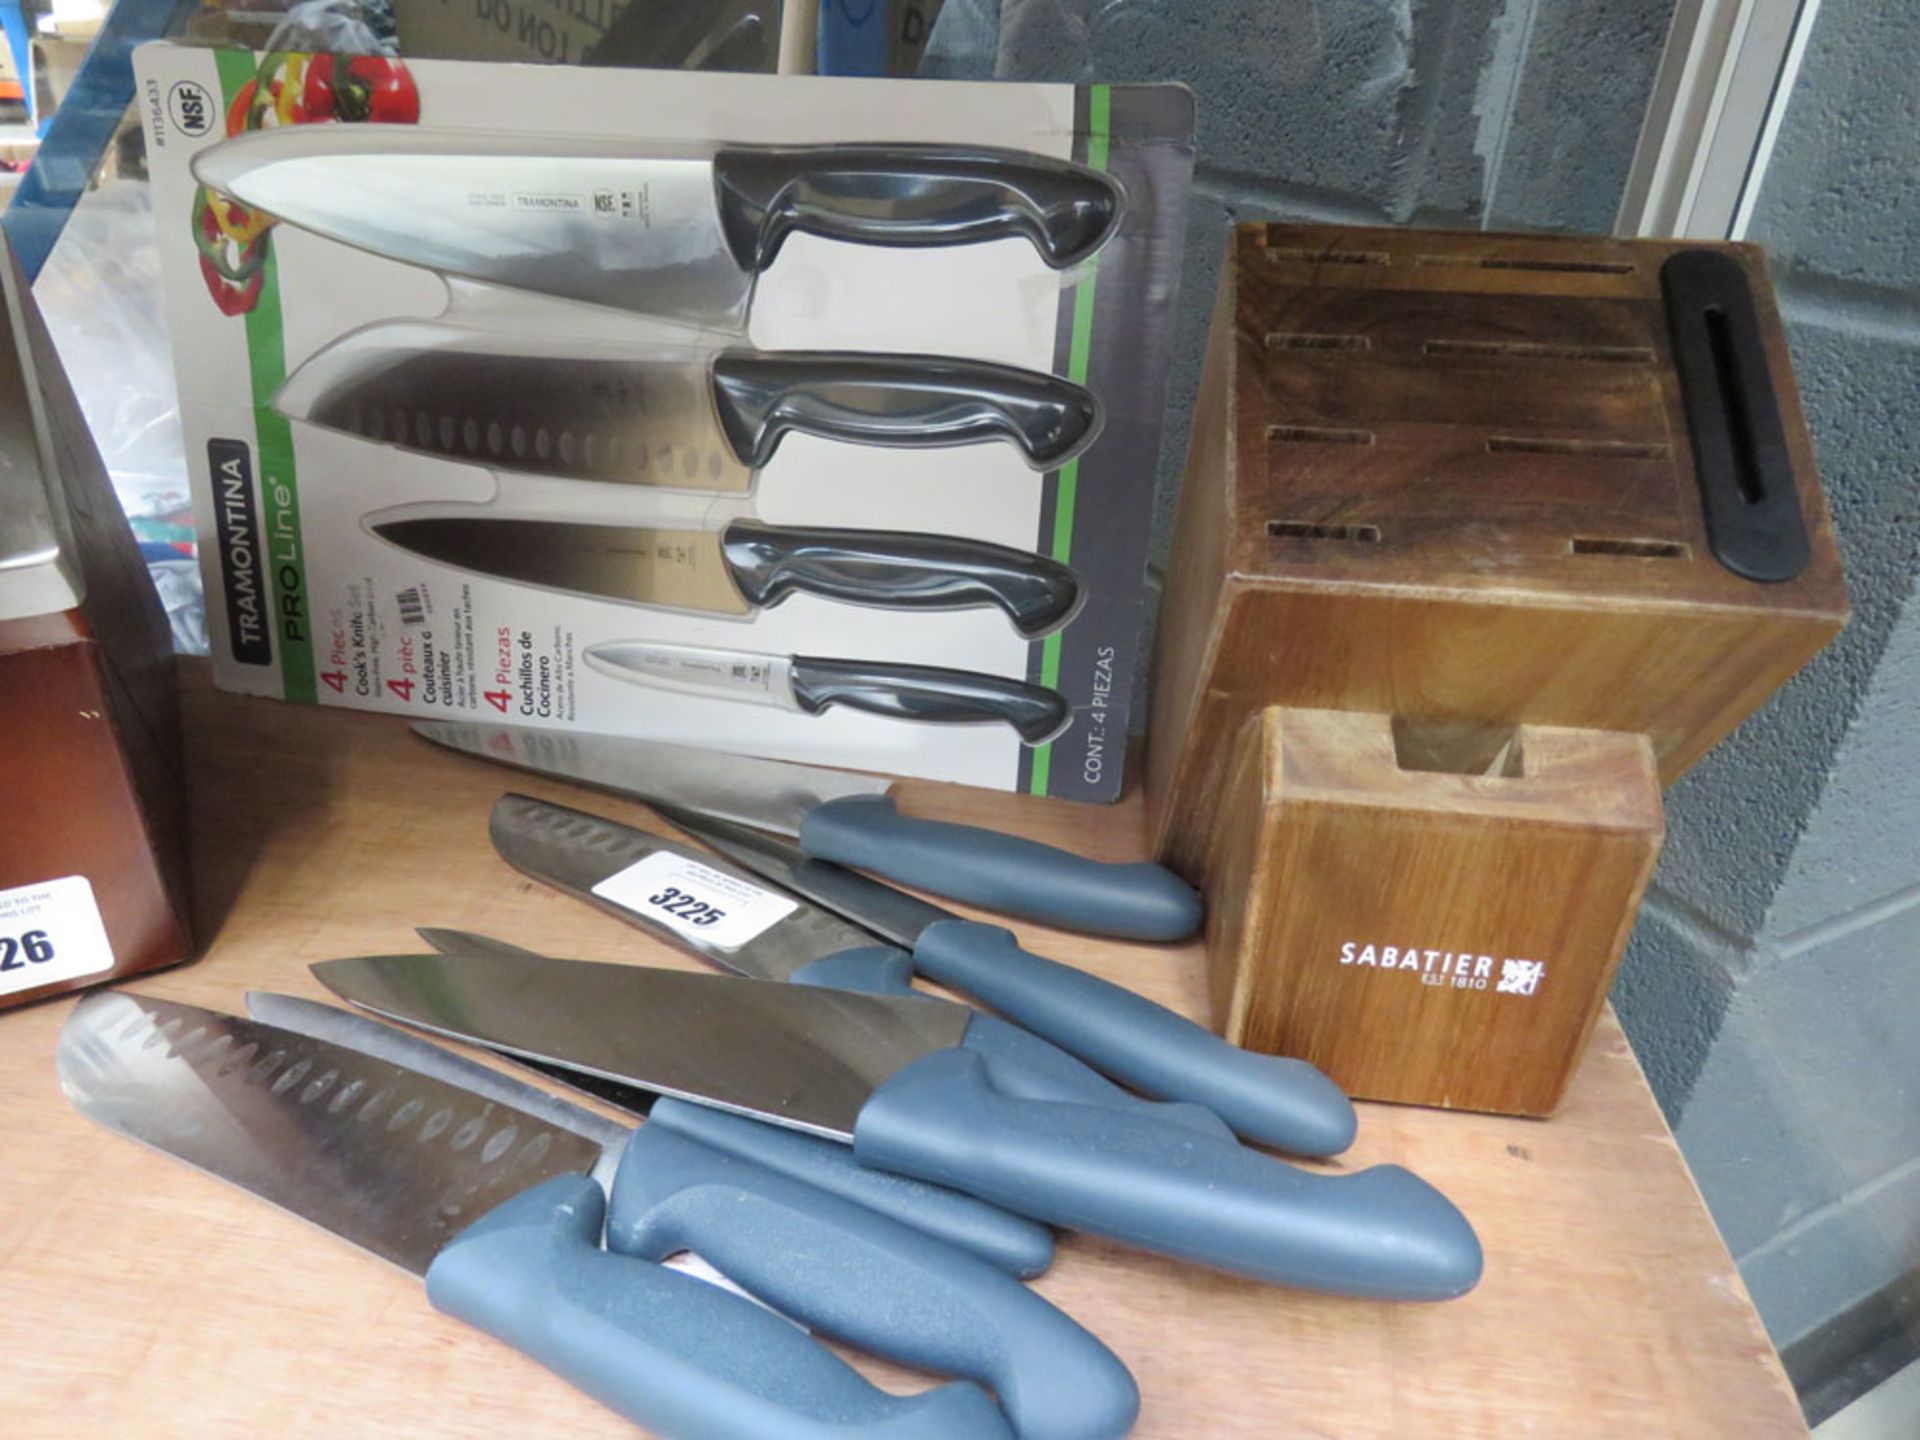 Sabatier knife block and 8 loose knives